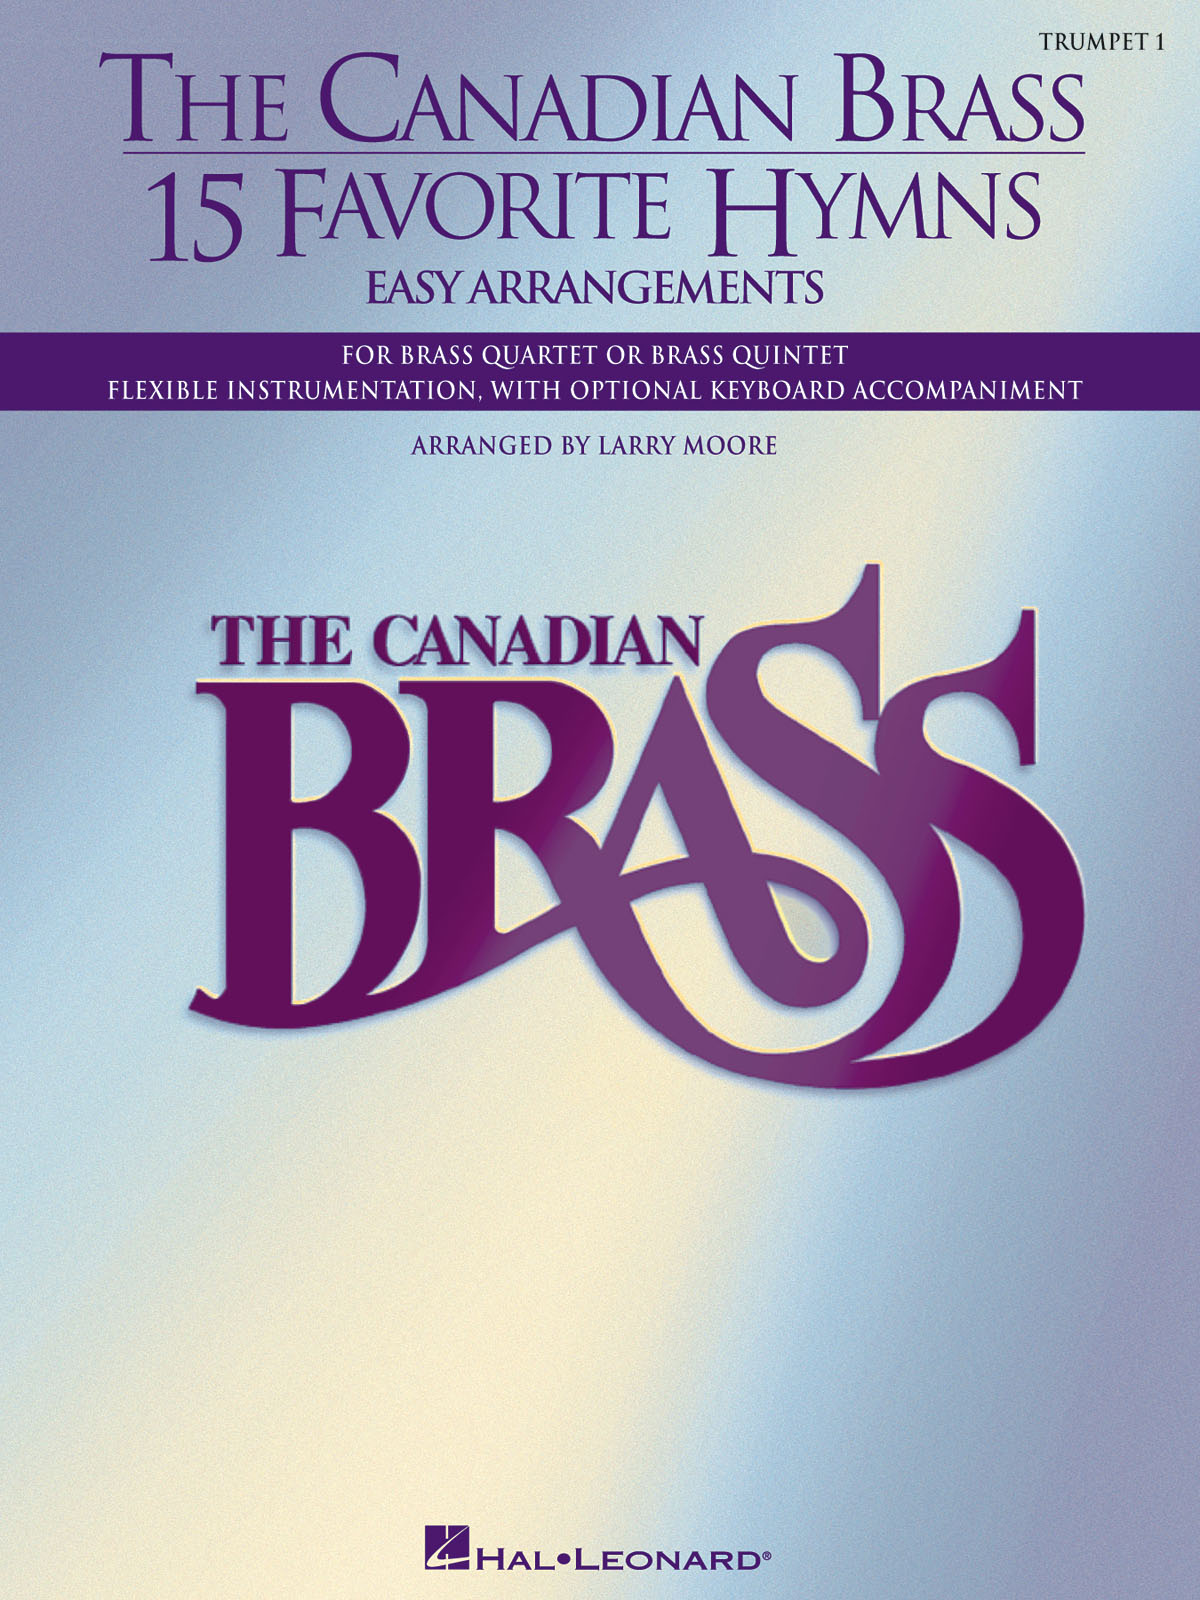 The Canadian Brass - 15 Favorite Hymns - Trumpet 1: Trumpet: Part